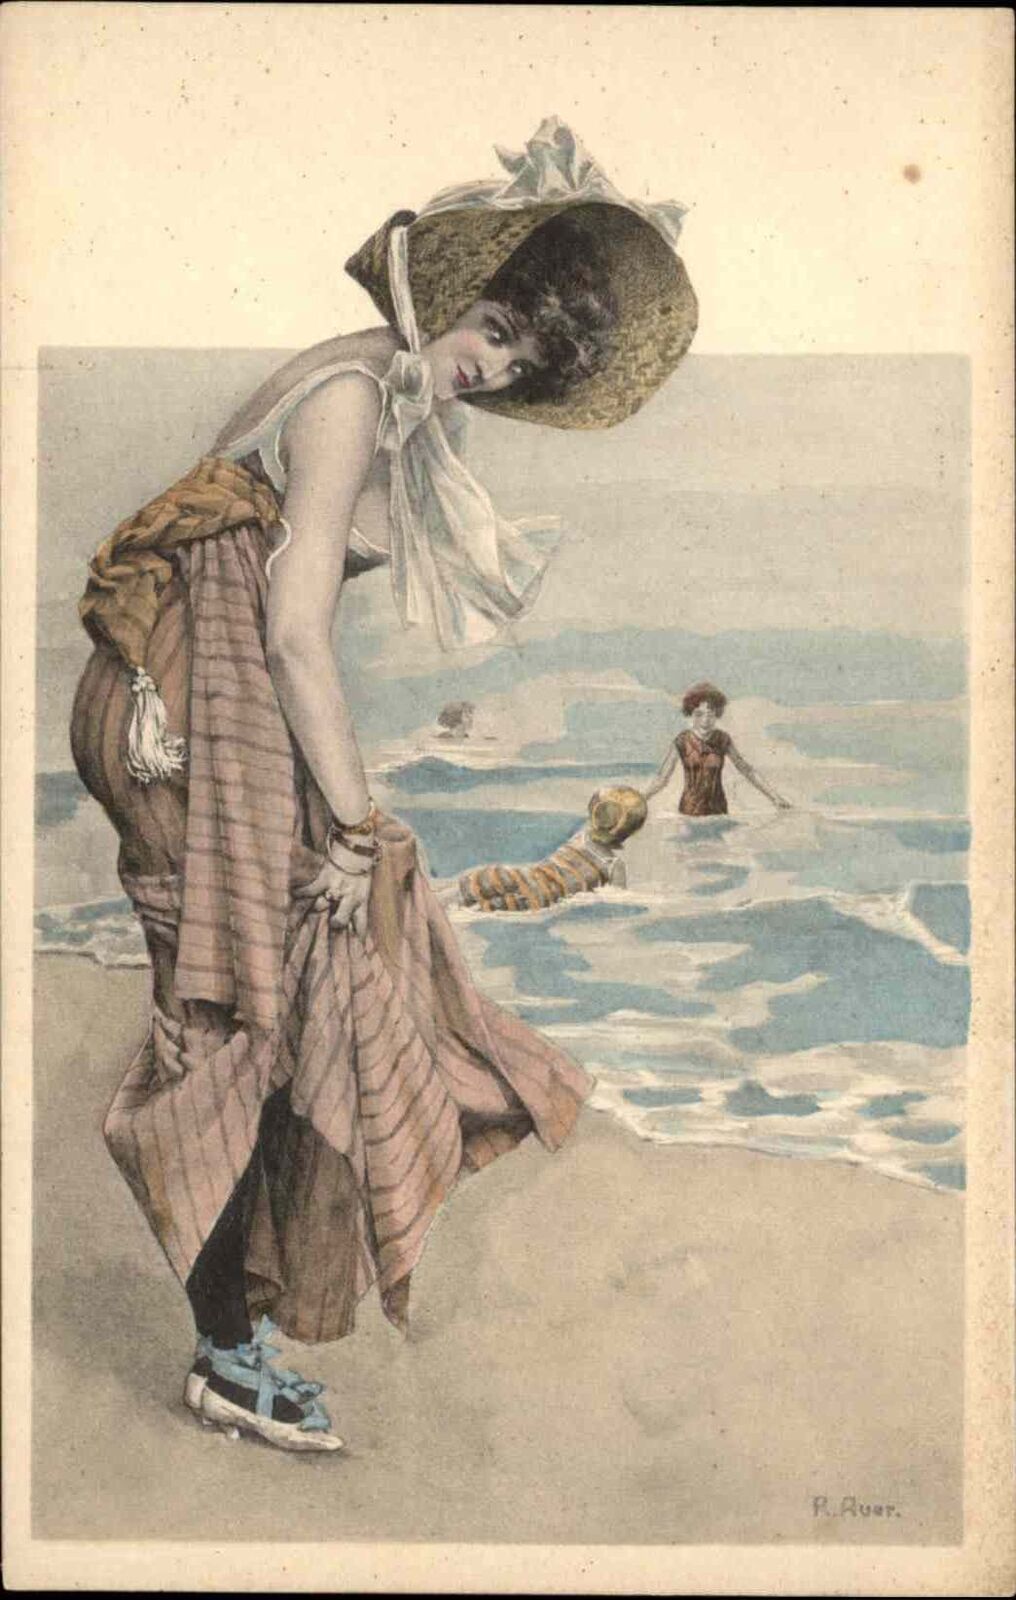 R. Auer Bathing Beauty Beautiful Woman Seaside c1910 Vintage Postcard